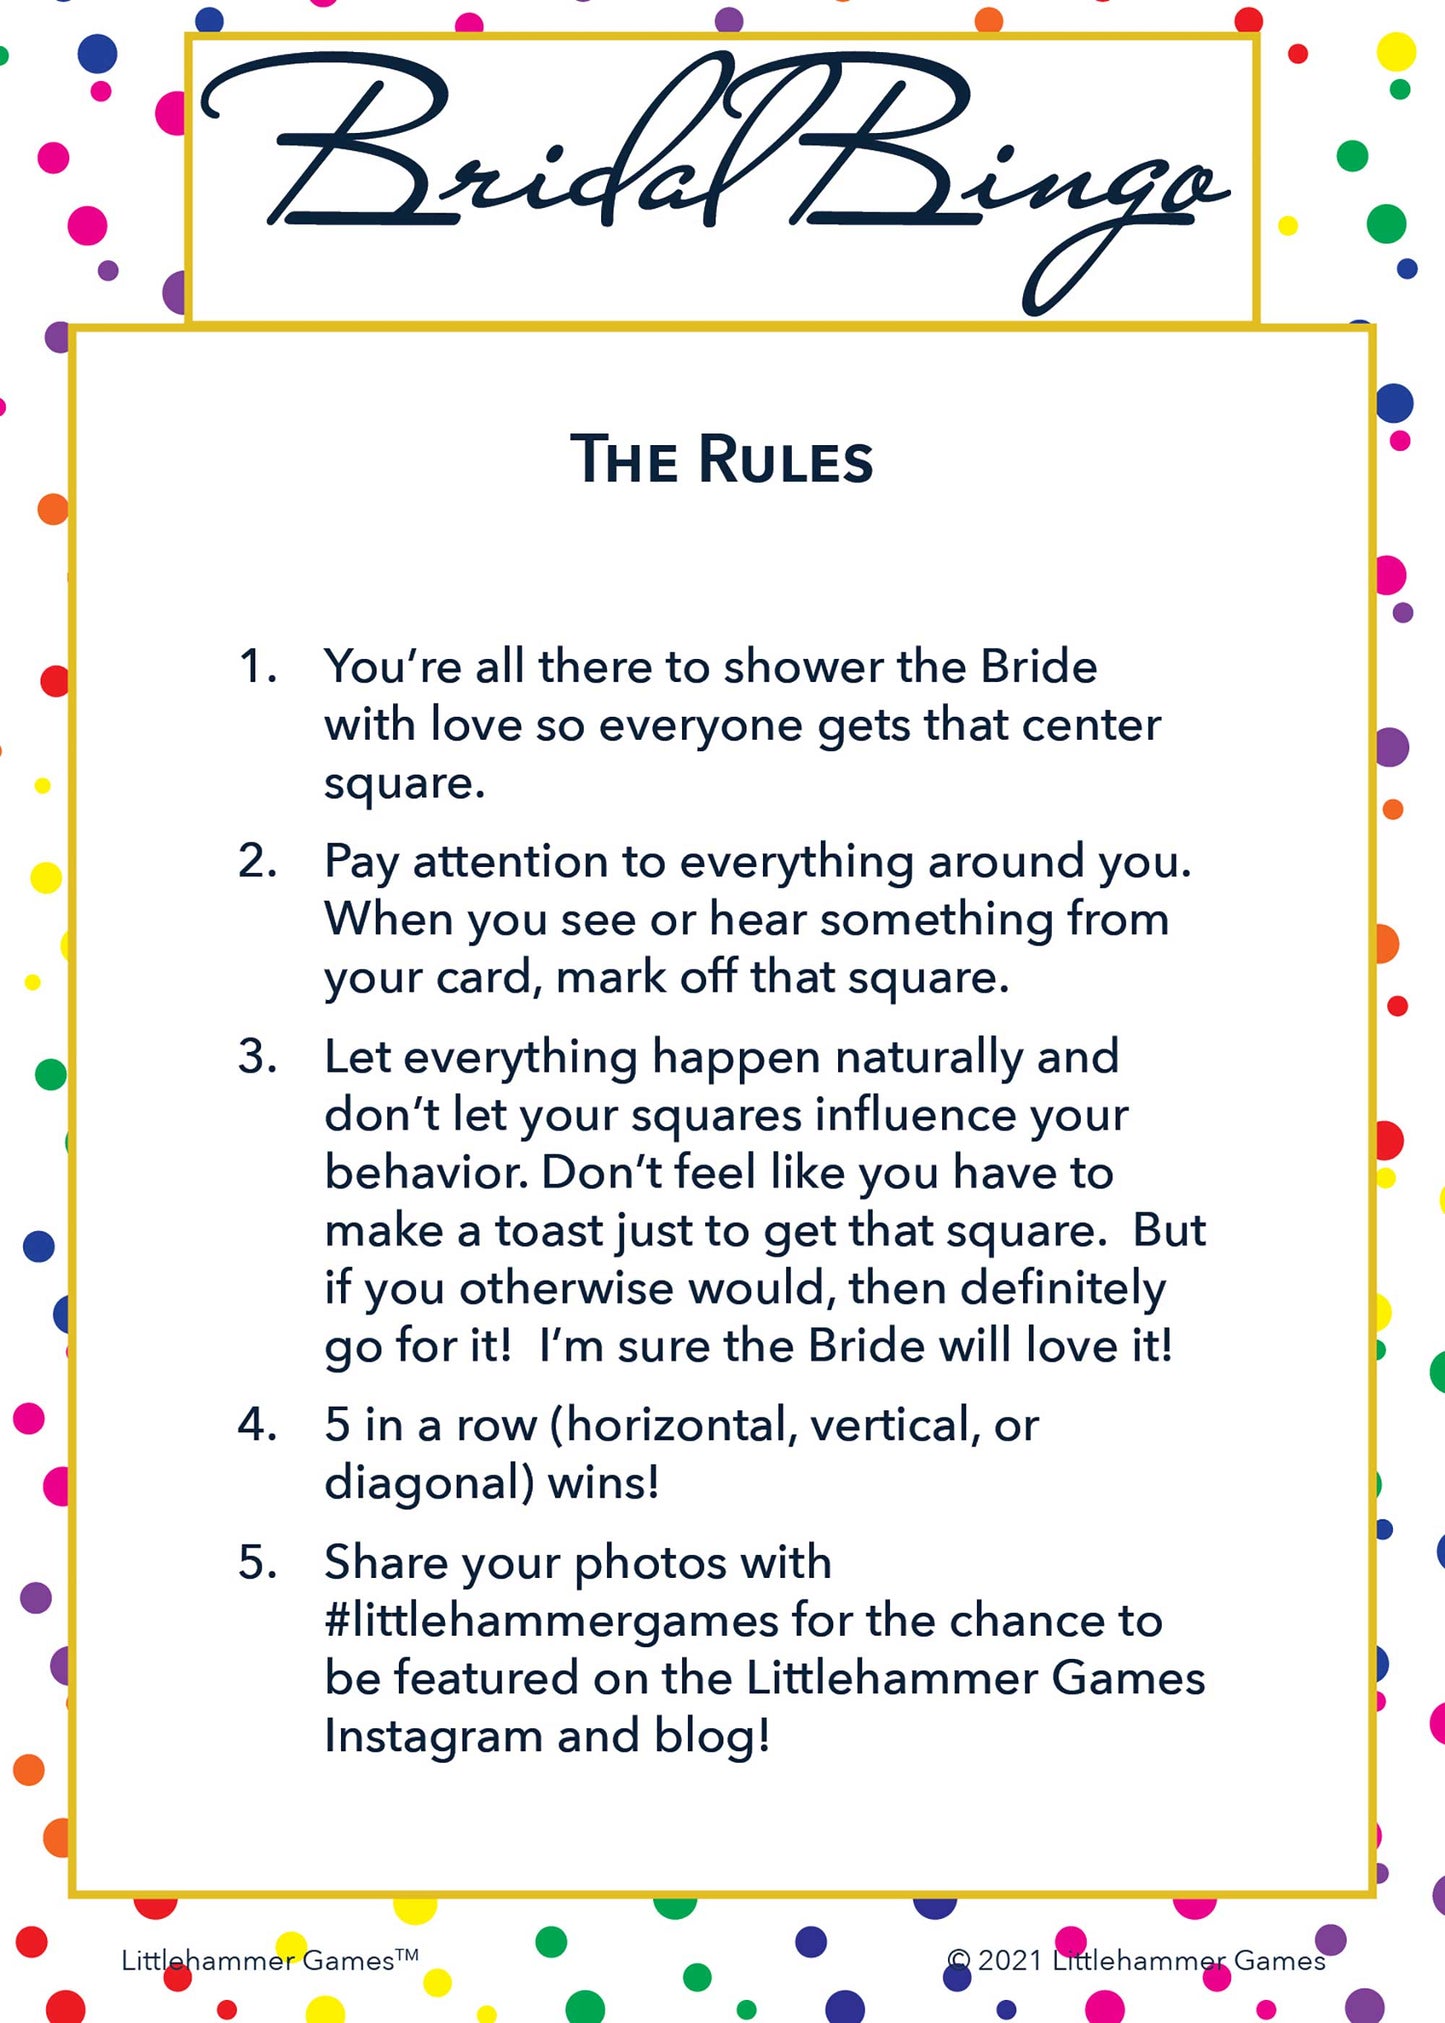 Bridal Bingo rules card on a rainbow polka dot background